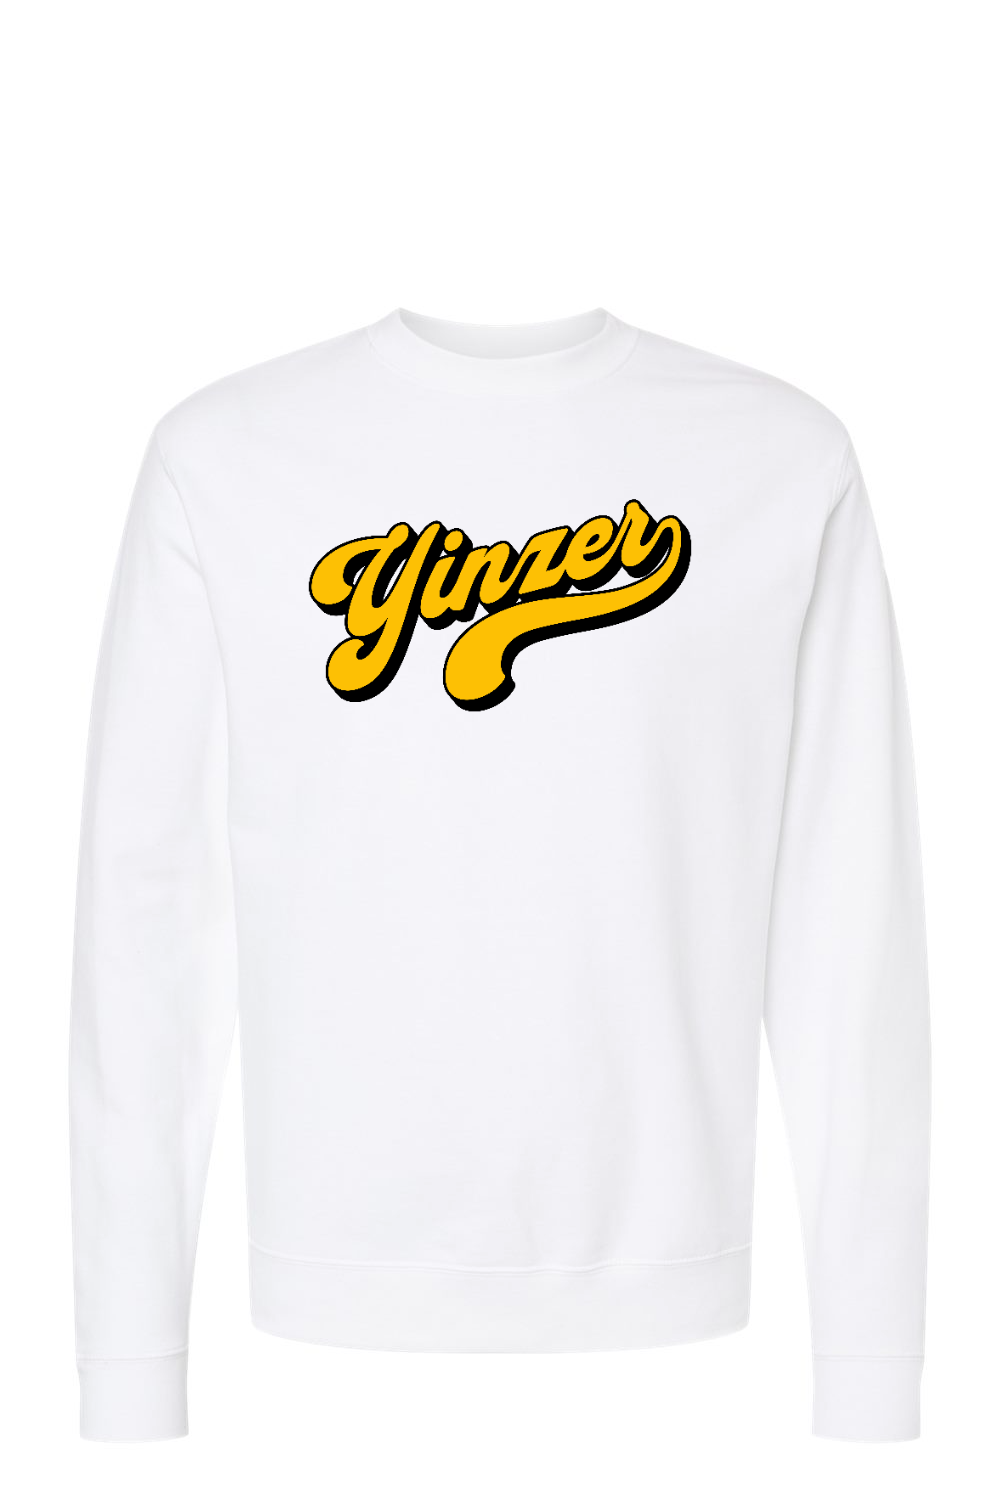 Yinzer Signature - Premium Crewneck Sweatshirt - Yinzylvania